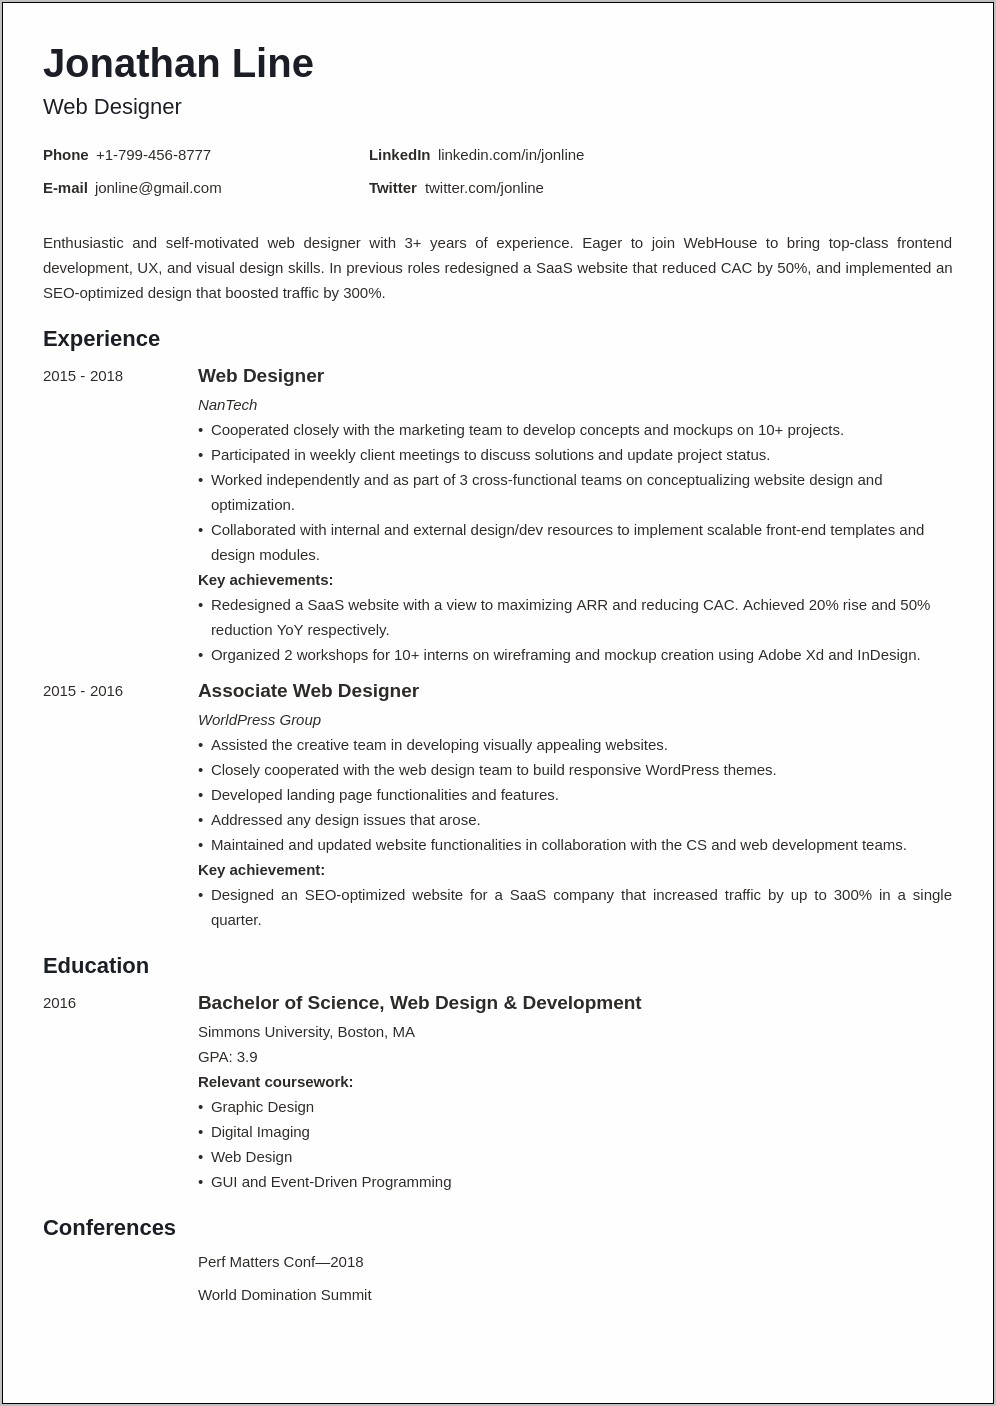 Web Designer Job Description Resume